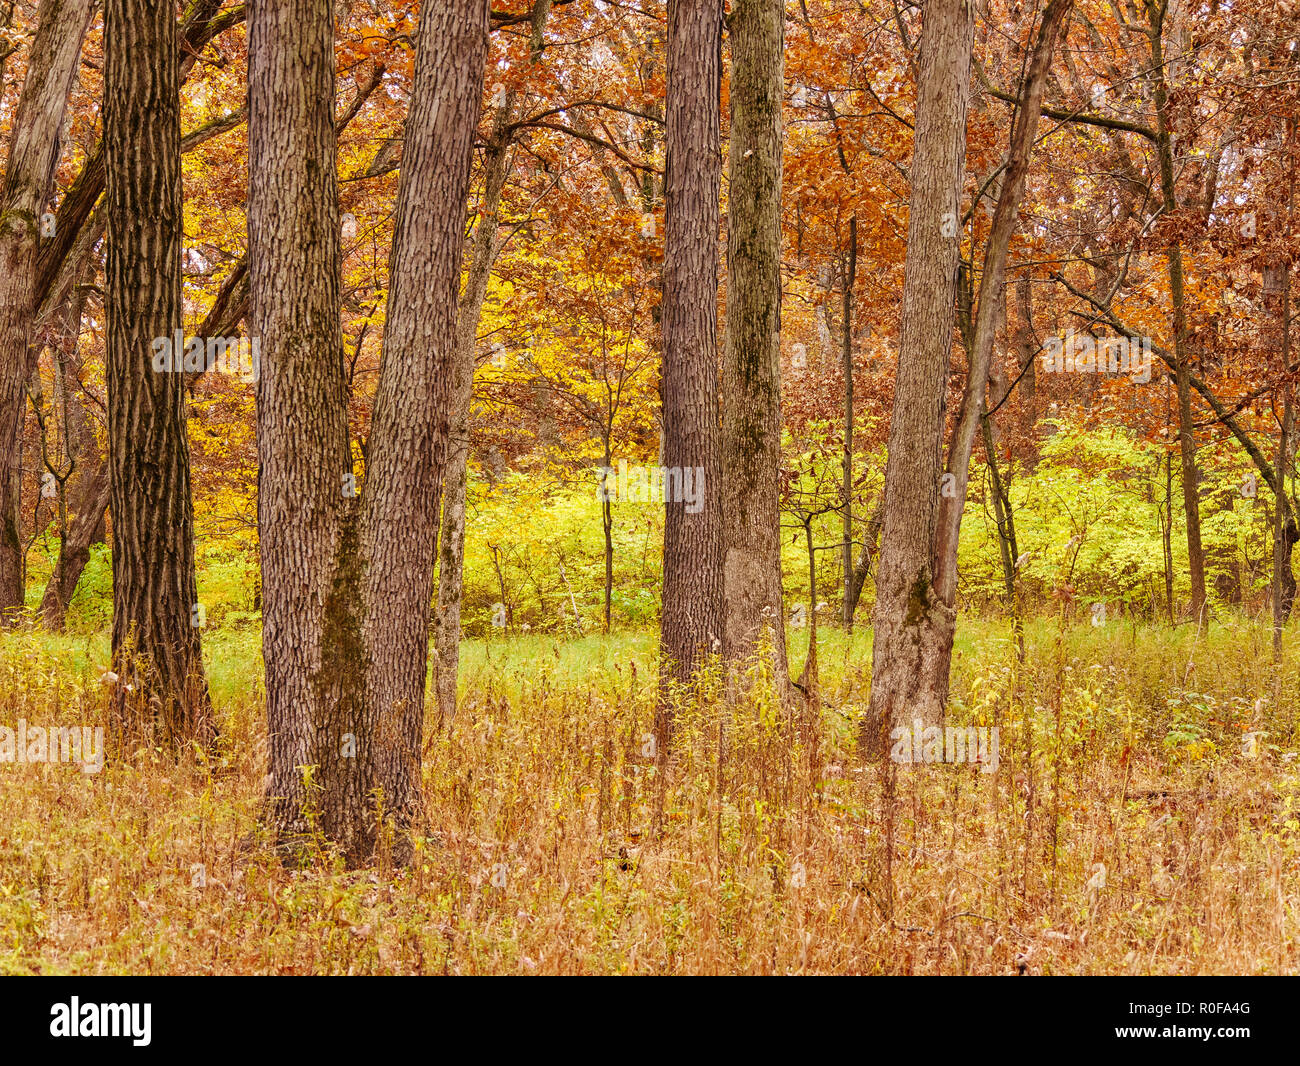 Habitat restoration of oak savanna, with unrestored area choked with amur honeysuckle in background. Country Lane Wooks, Illinois. Stock Photo